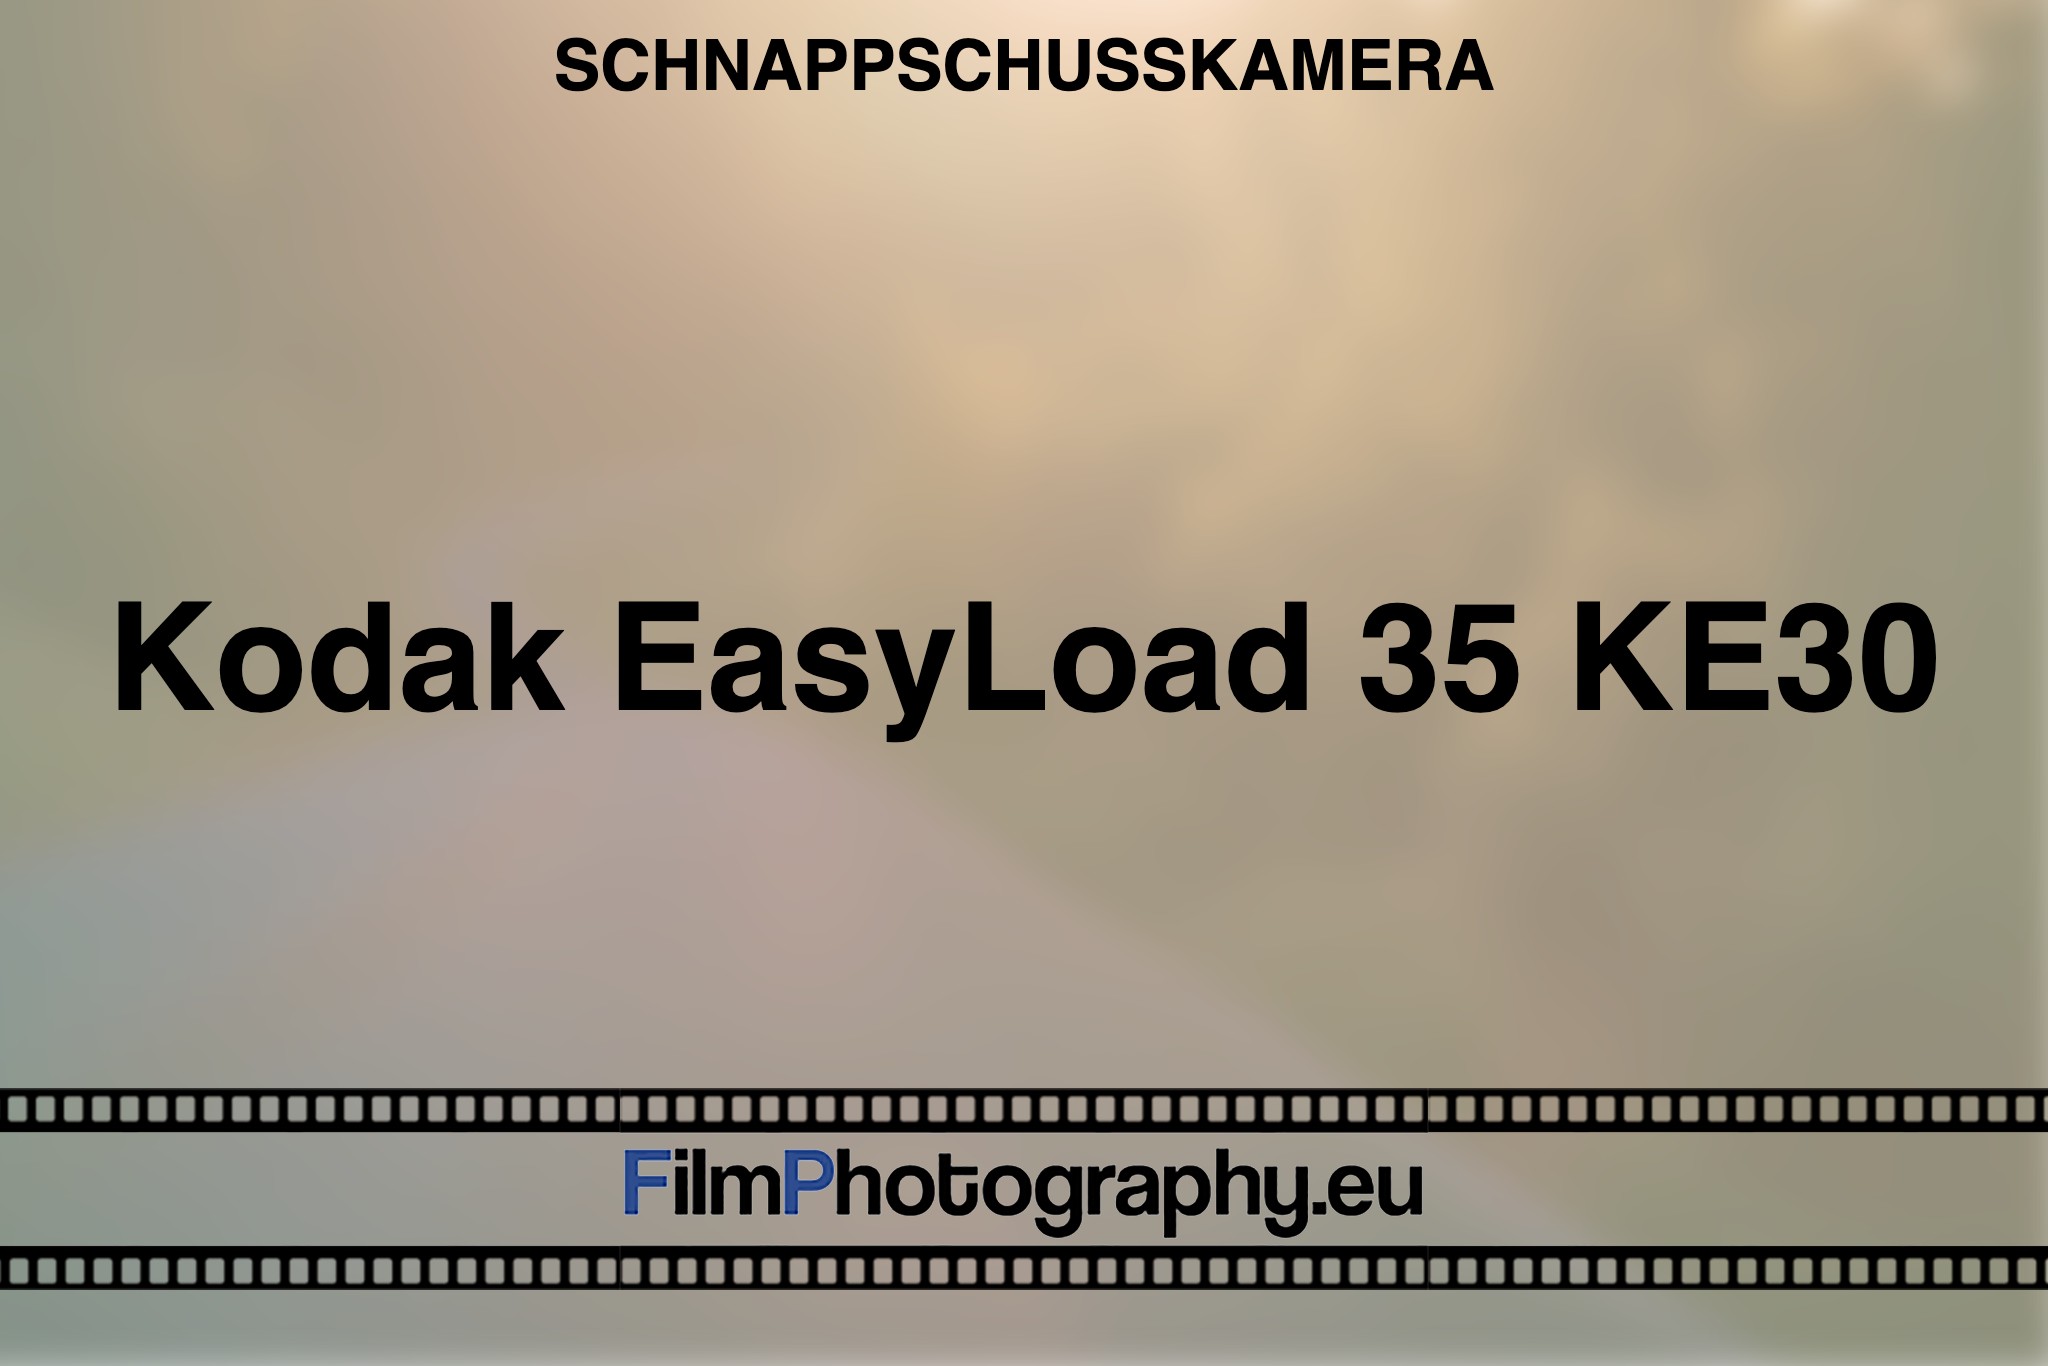 kodak-easyload-35-ke30-schnappschusskamera-bnv